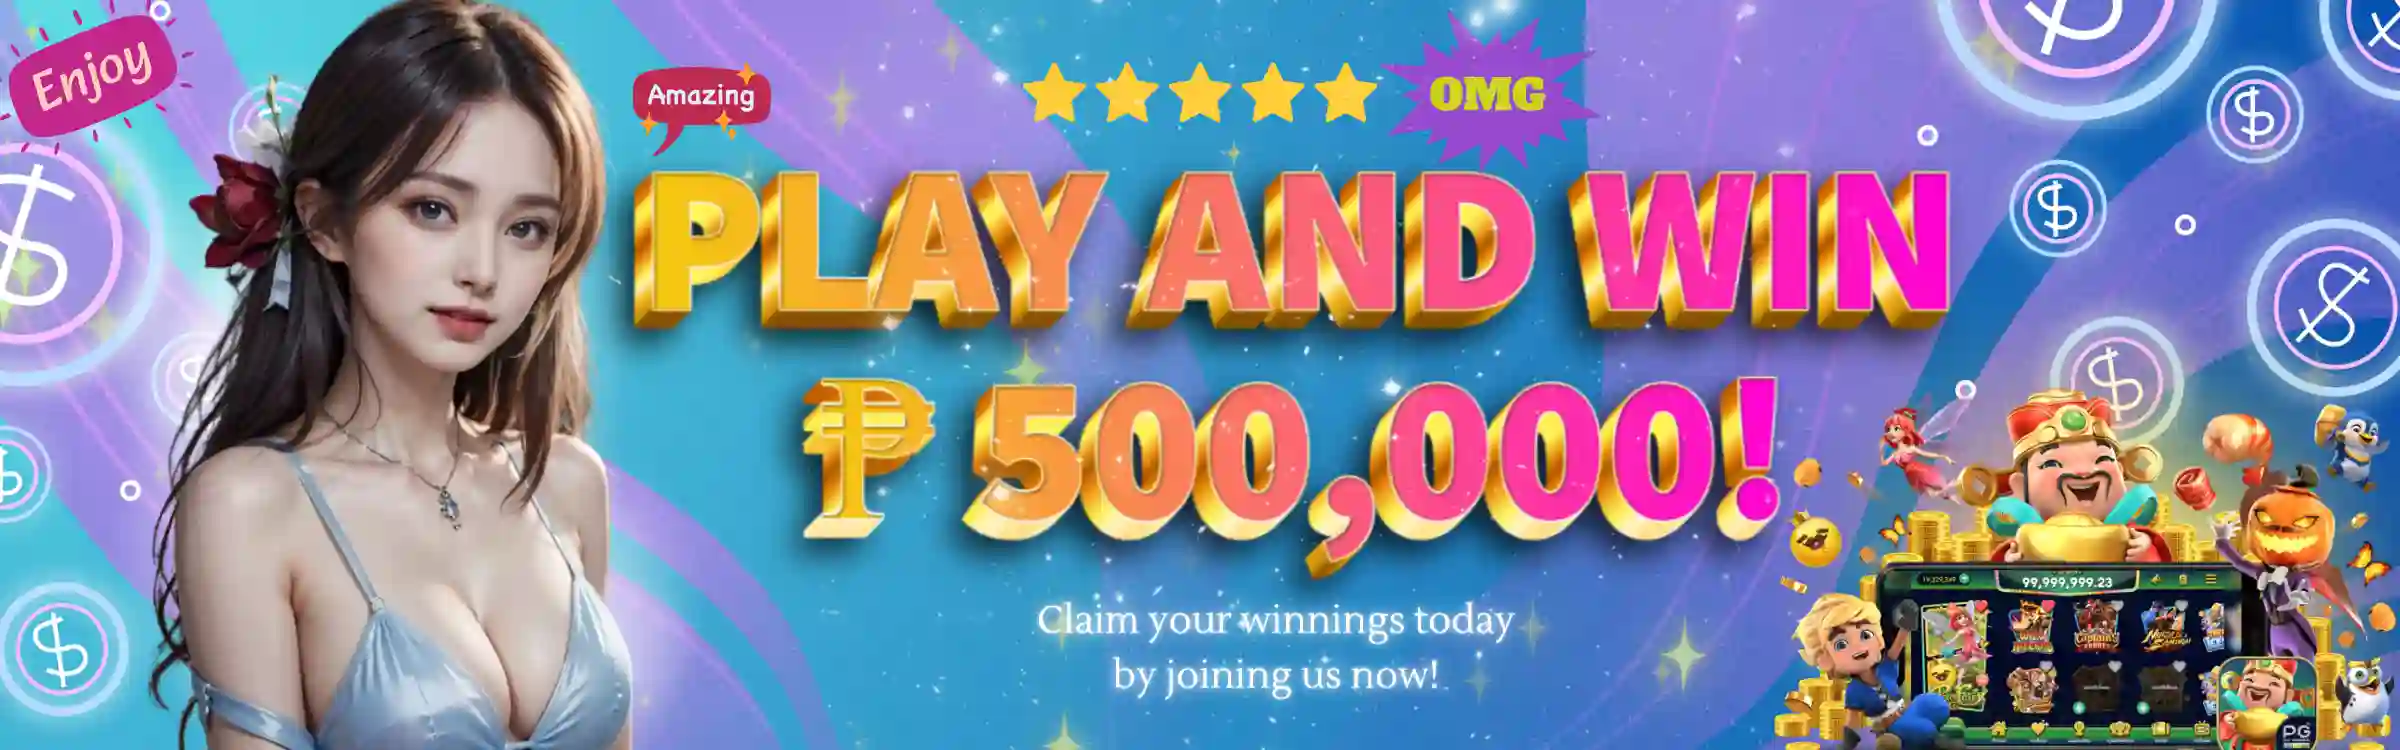 yoocars Deposit-play to win p500K